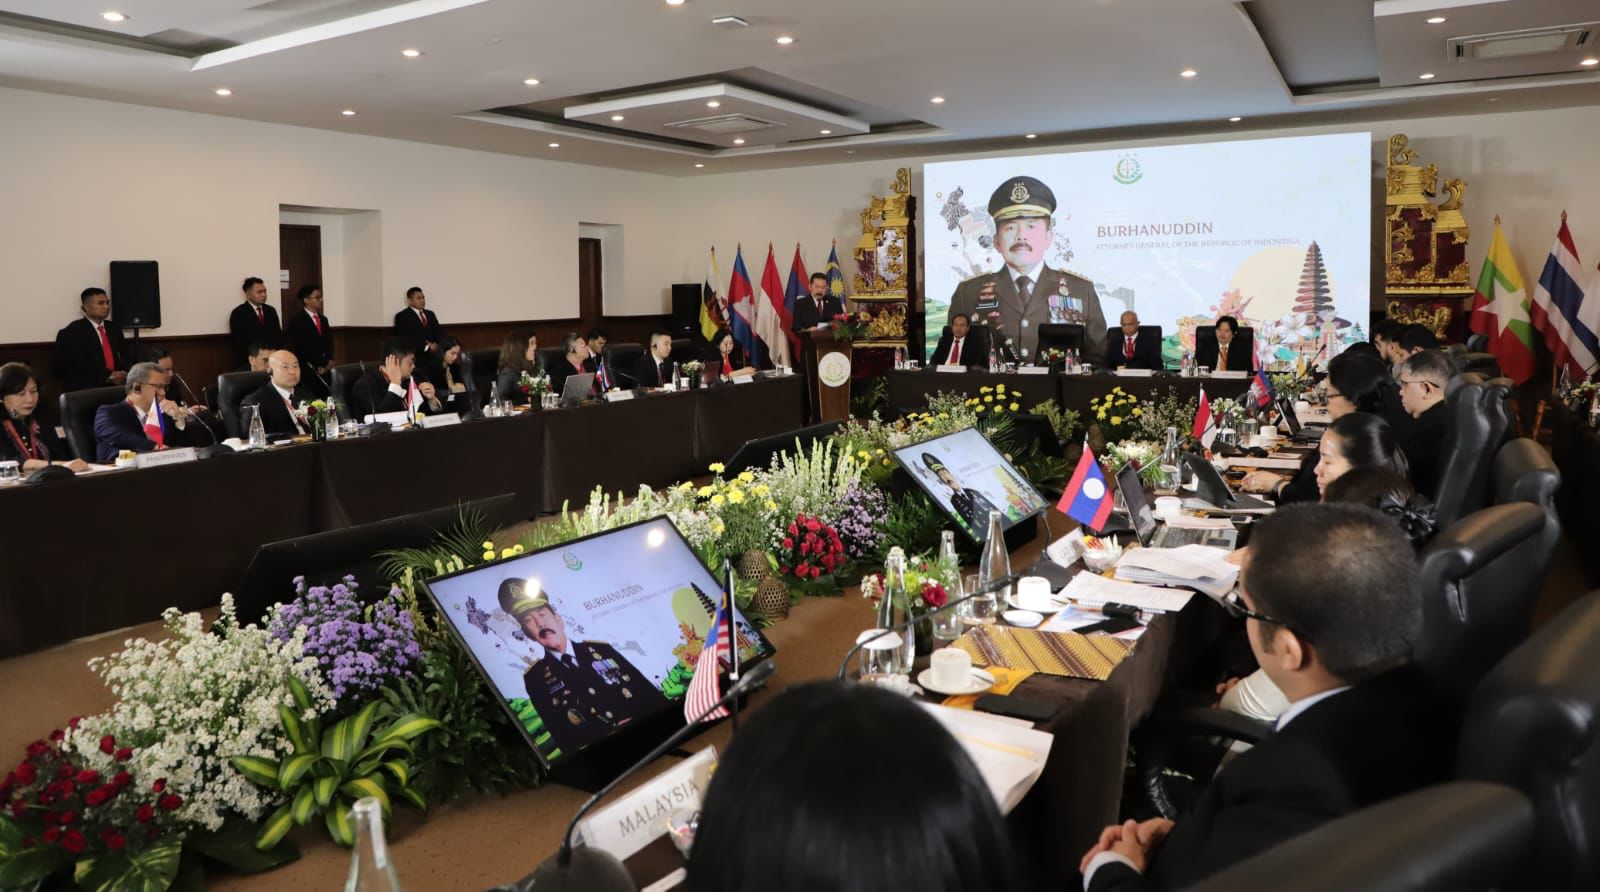 Jaksa Agung ST Burhanuddin: Entitas Jaksa ASEAN Tingkatkan Kolaborasi Antar Lembaga Kejaksaan se-ASEAN